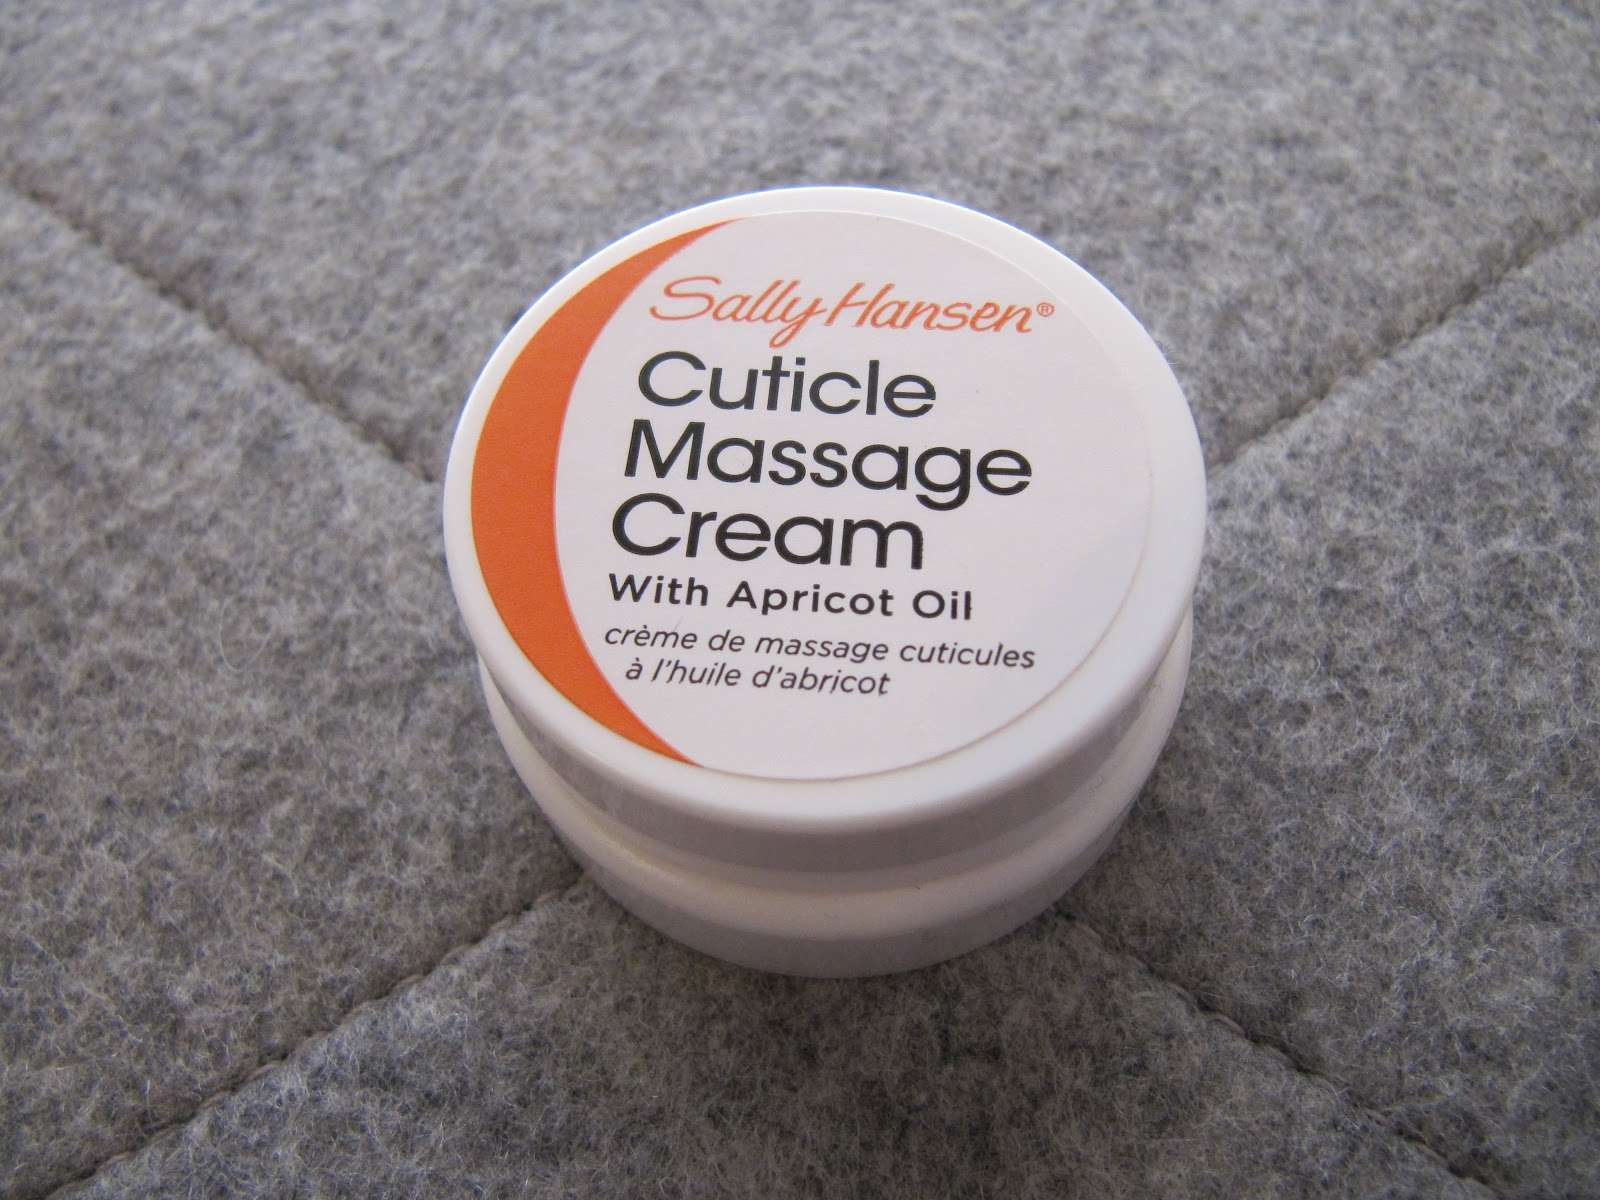 Costello Beauty Reviews: Sally Hansen Cuticle Massage Cream Review